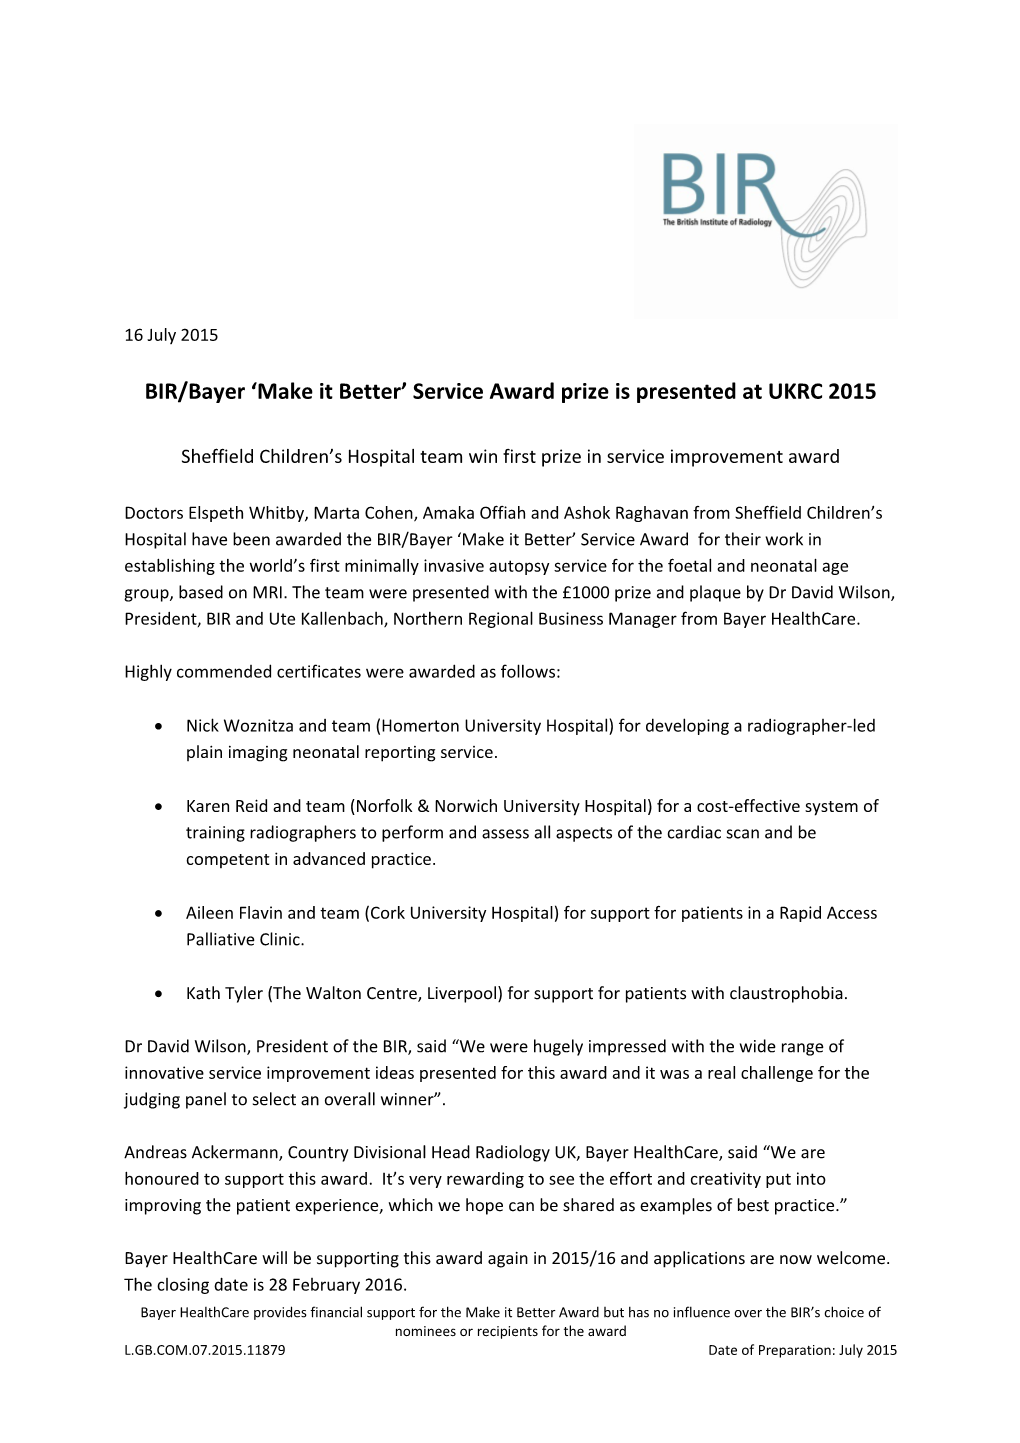 BIR/Bayer Make It Better Service Award Prize Is Presented at UKRC 2015